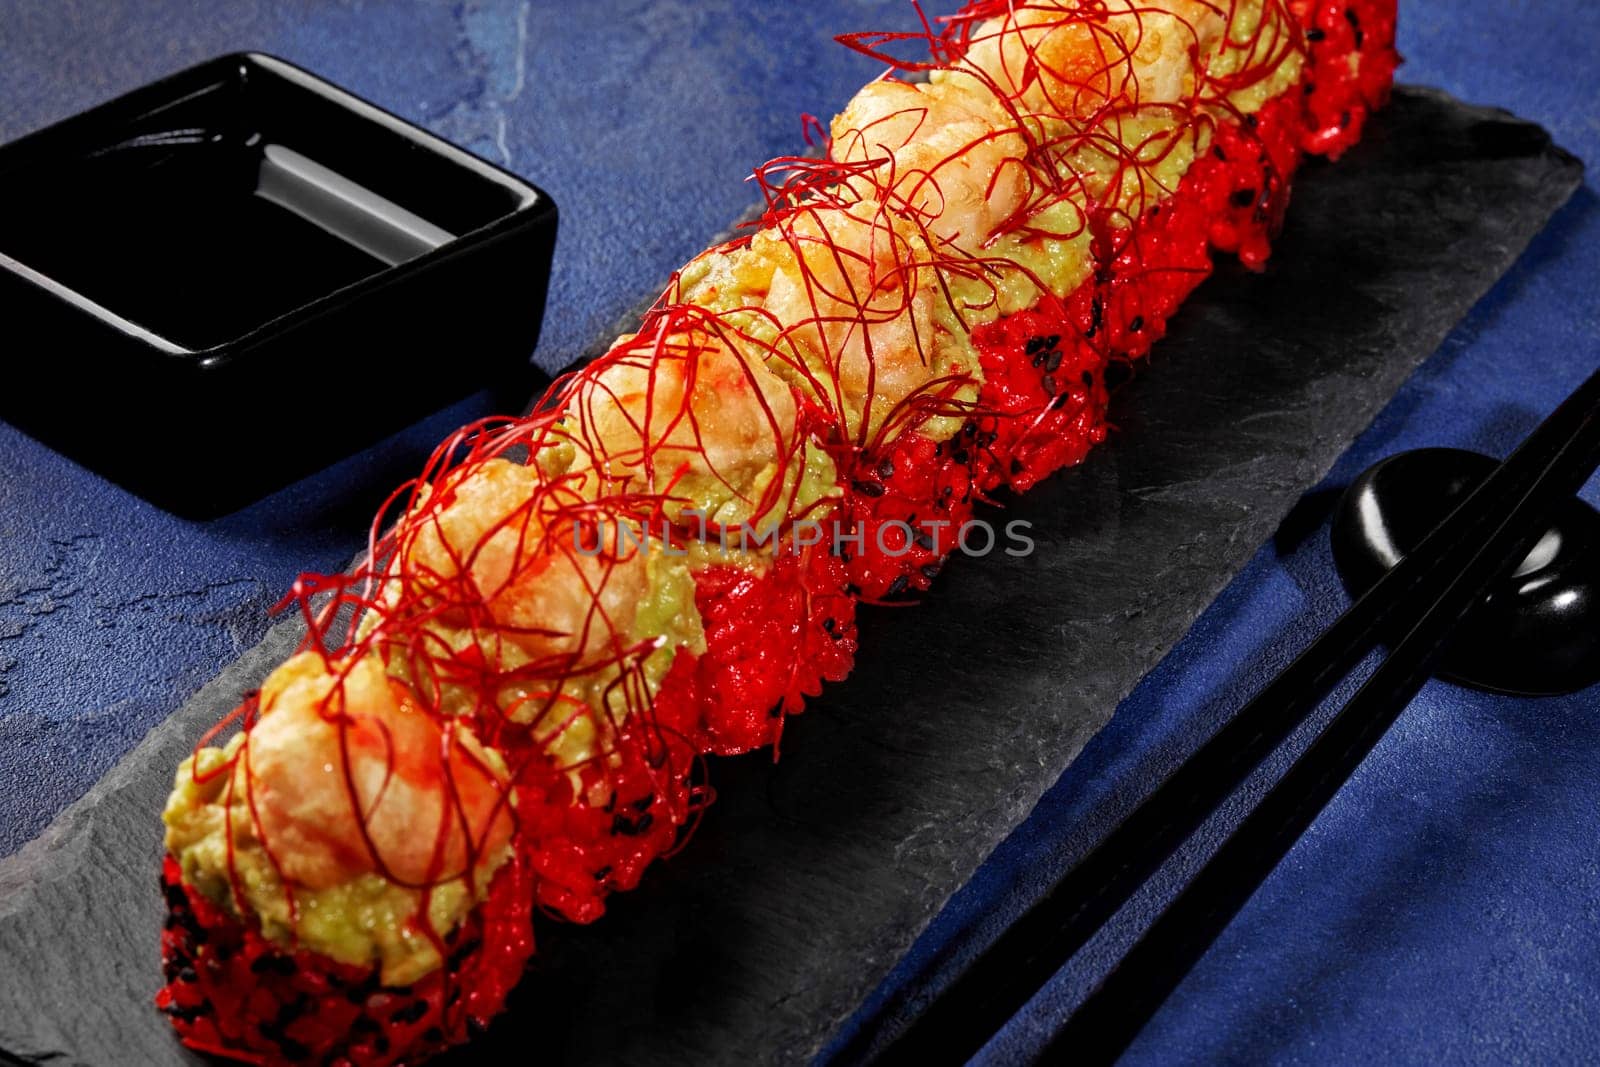 Red sushi rolls with avocado spread and shrimp tempura by nazarovsergey